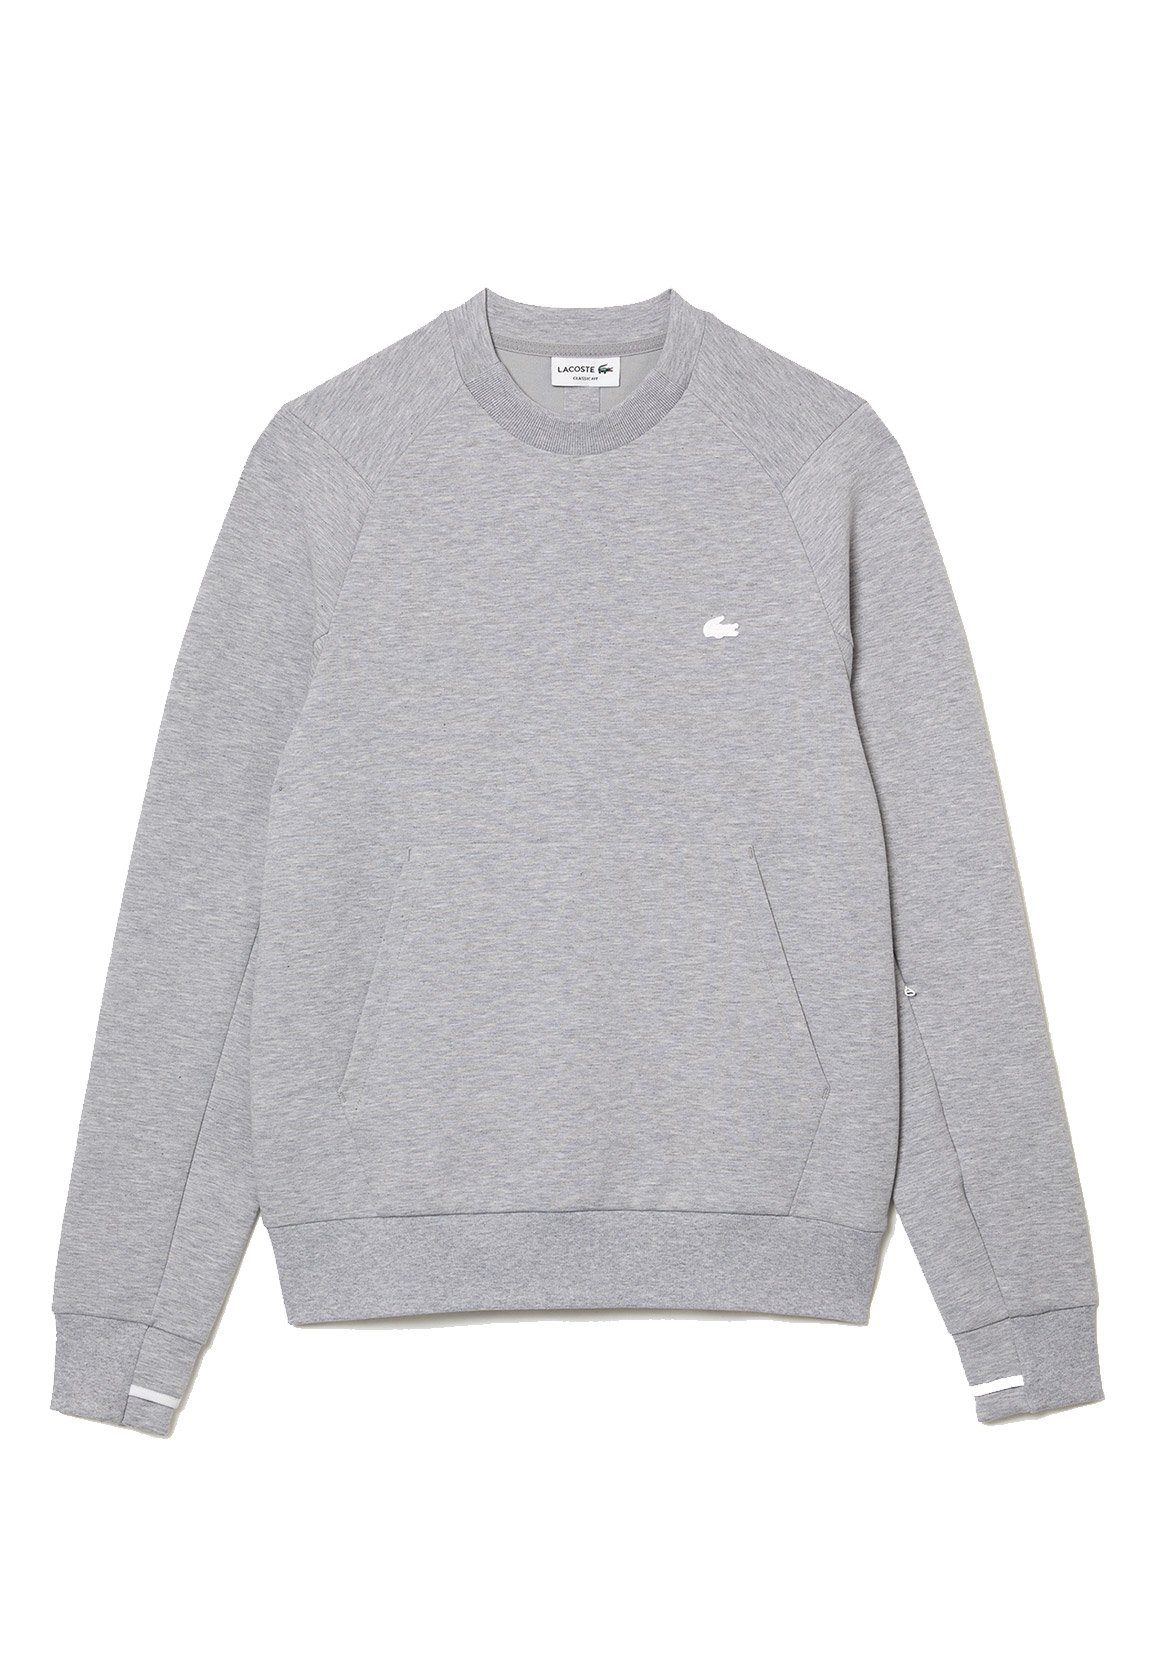 Lacoste Sweater Lacoste Herren Sweater SWEATSHIRT SH2695 Gris Chine Grau | Sweatshirts